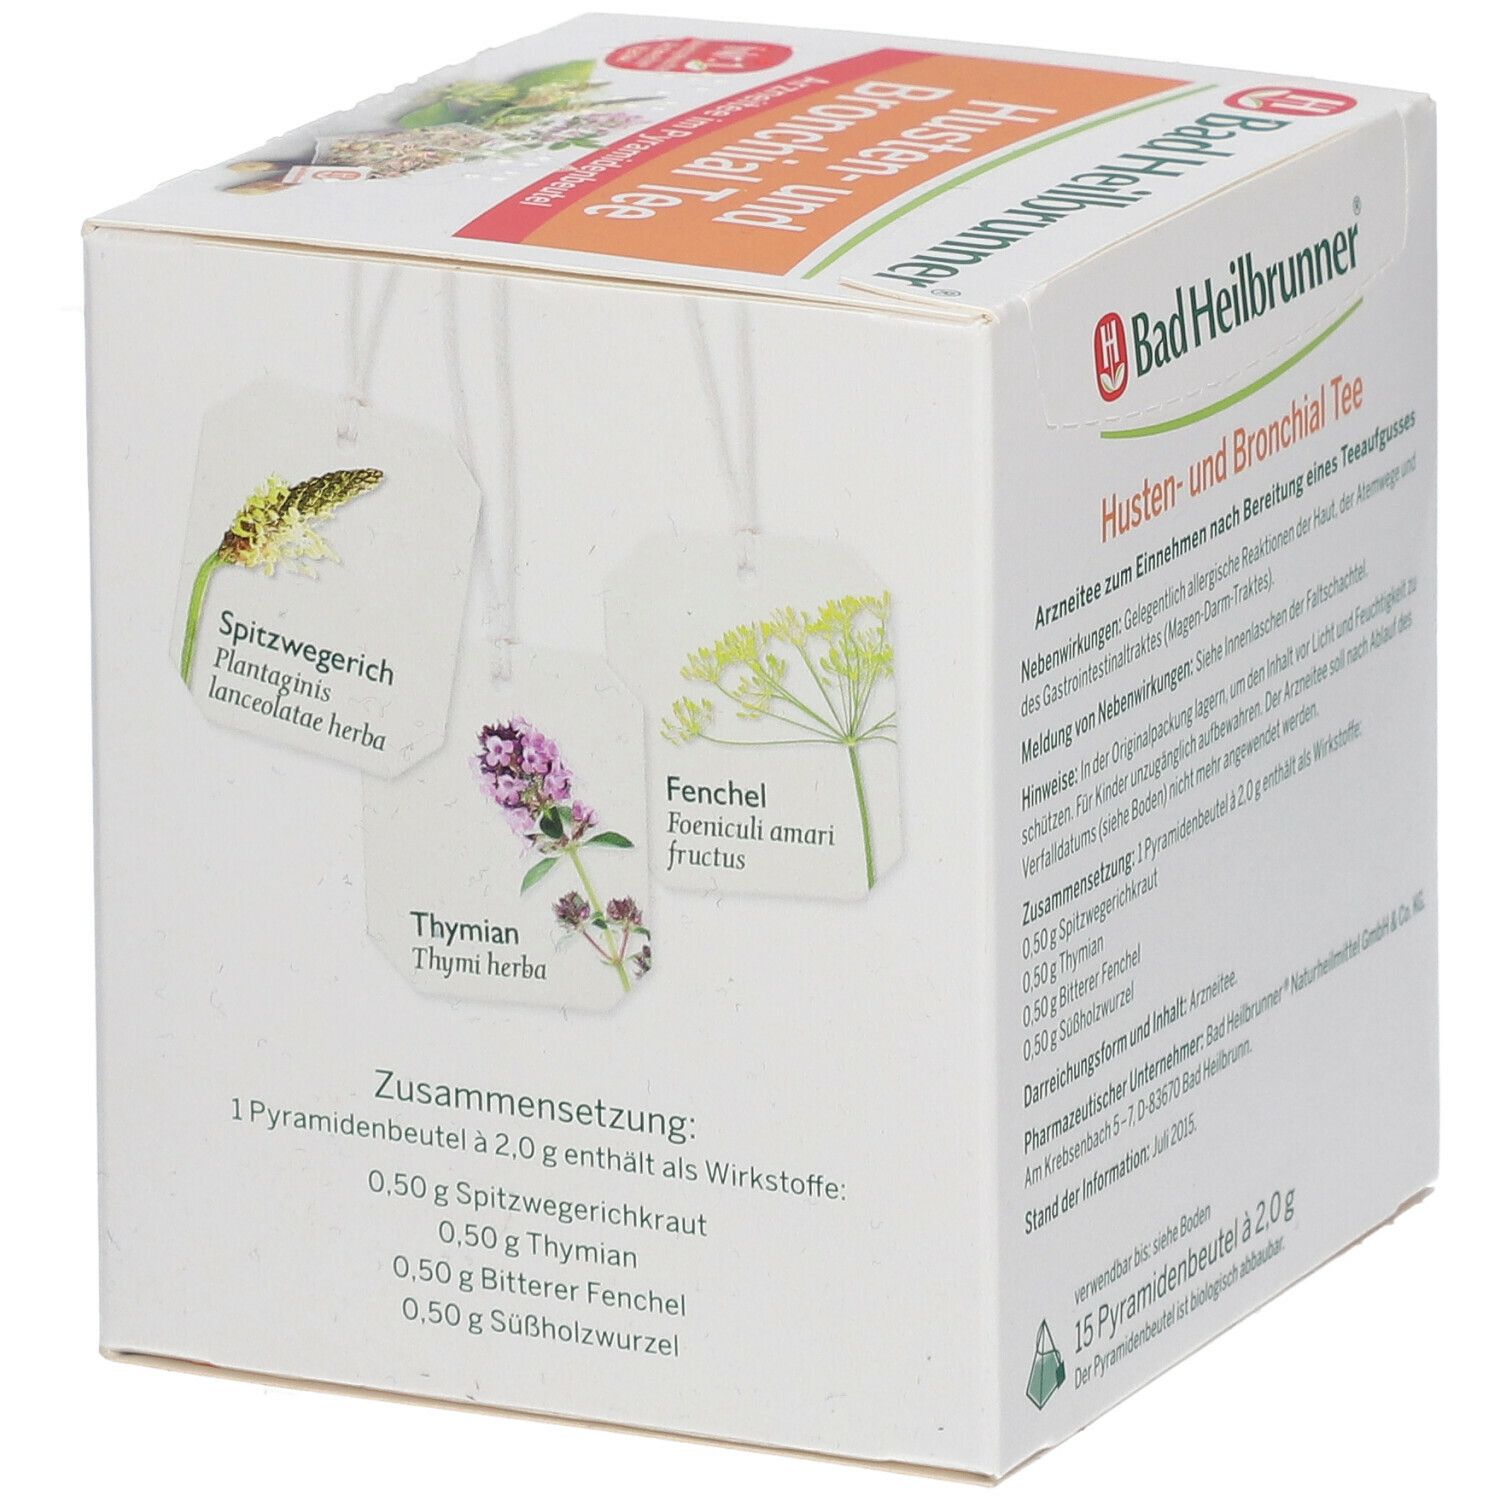 Bad Heilbrunner® Husten- und Bronchial Tee